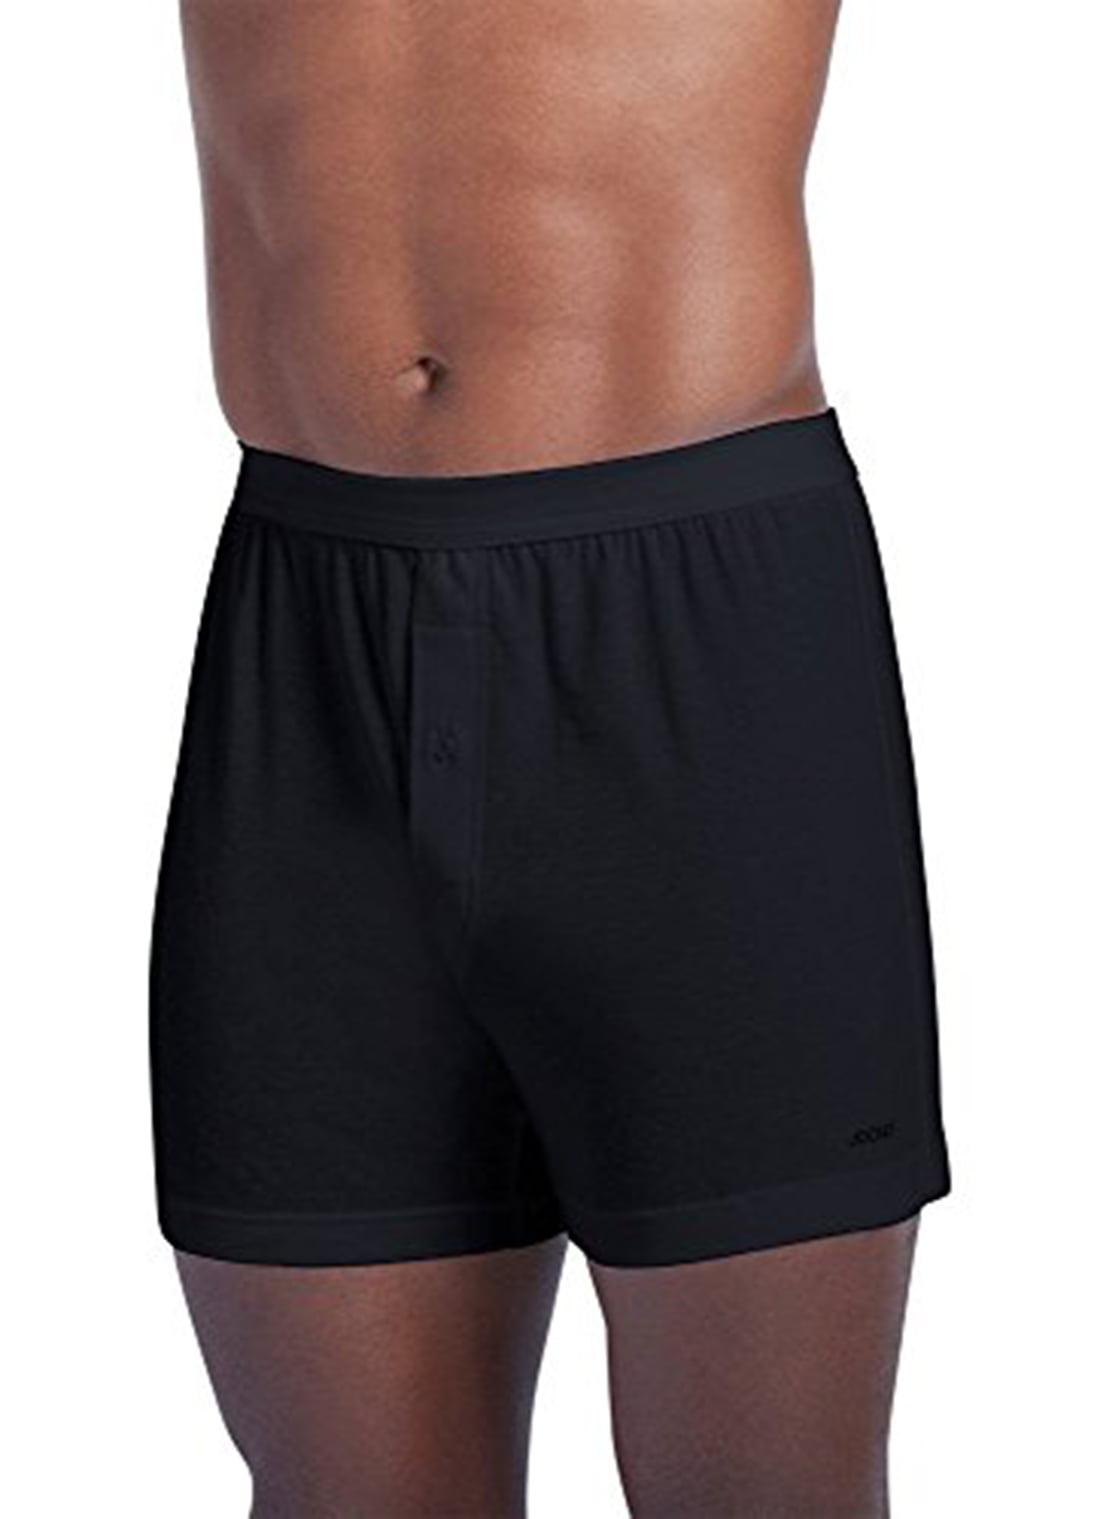 Jockey Men's Underwear Seamless Waistband Knit Boxer, Black, Small ...